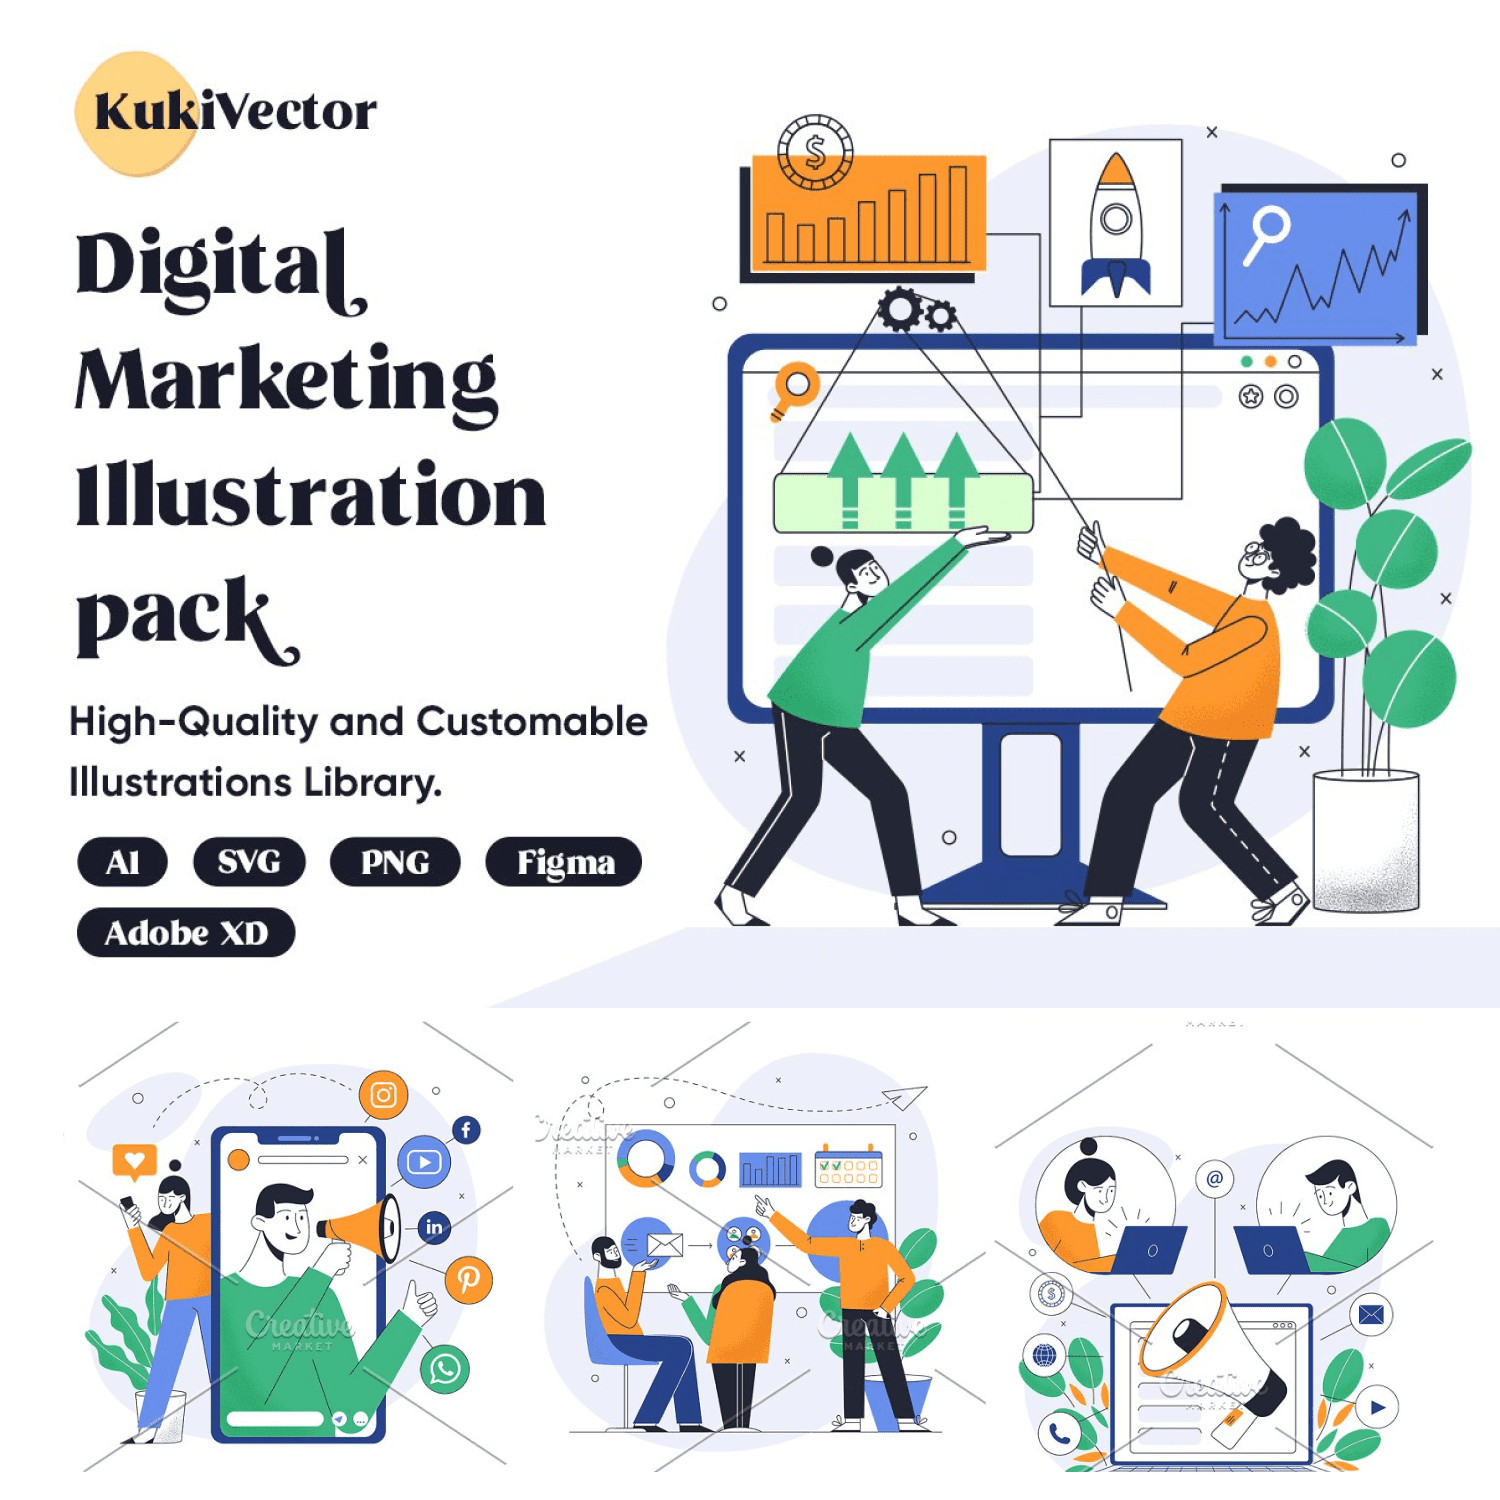 Digital Marketing Illustration Pack cover.